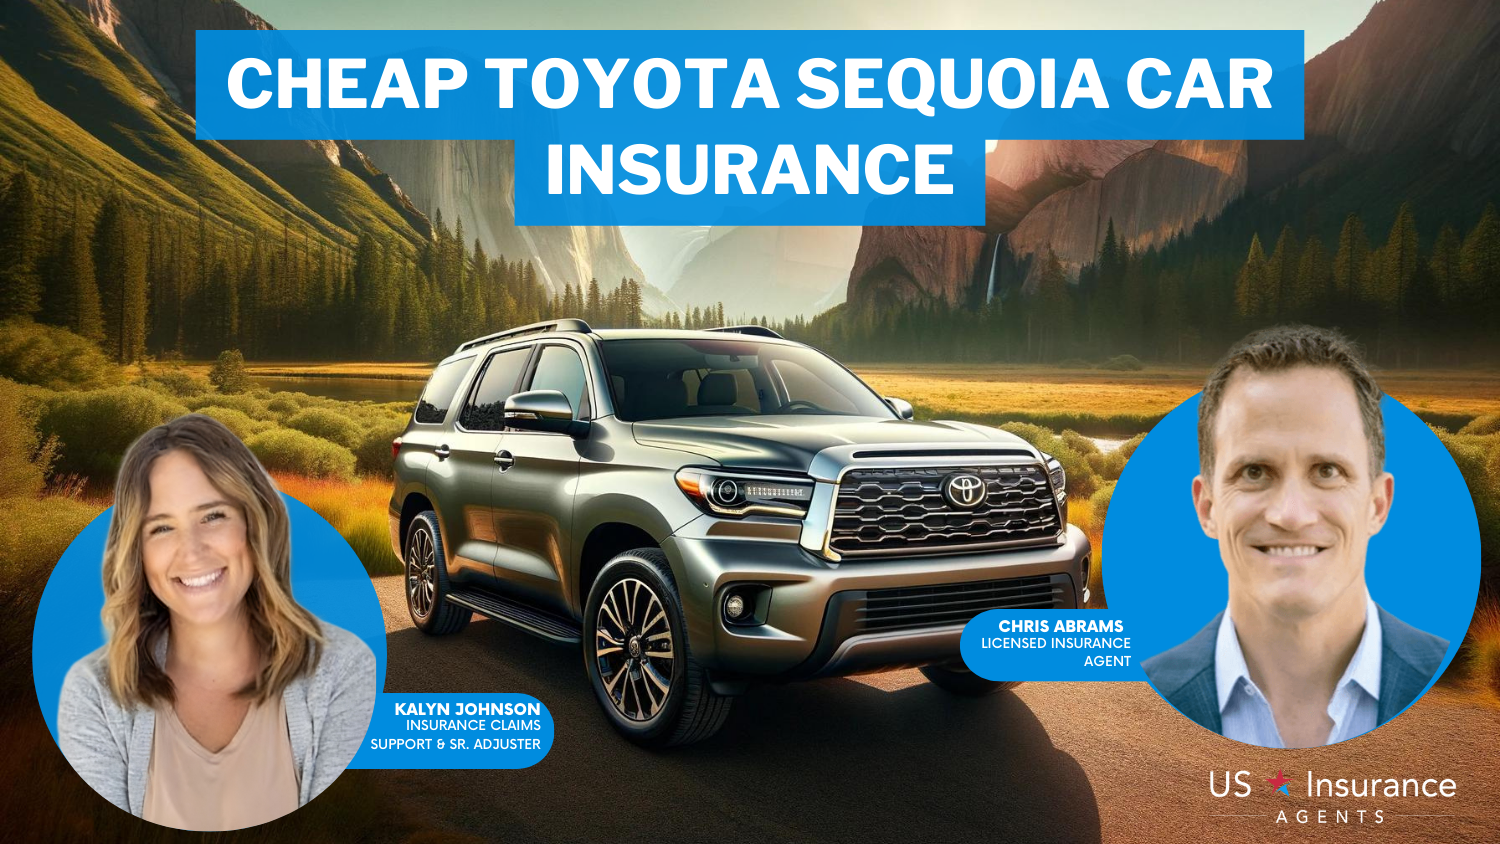 Cheap Toyota Sequoia Car Insurance: American Family, Progressive, and Farmers